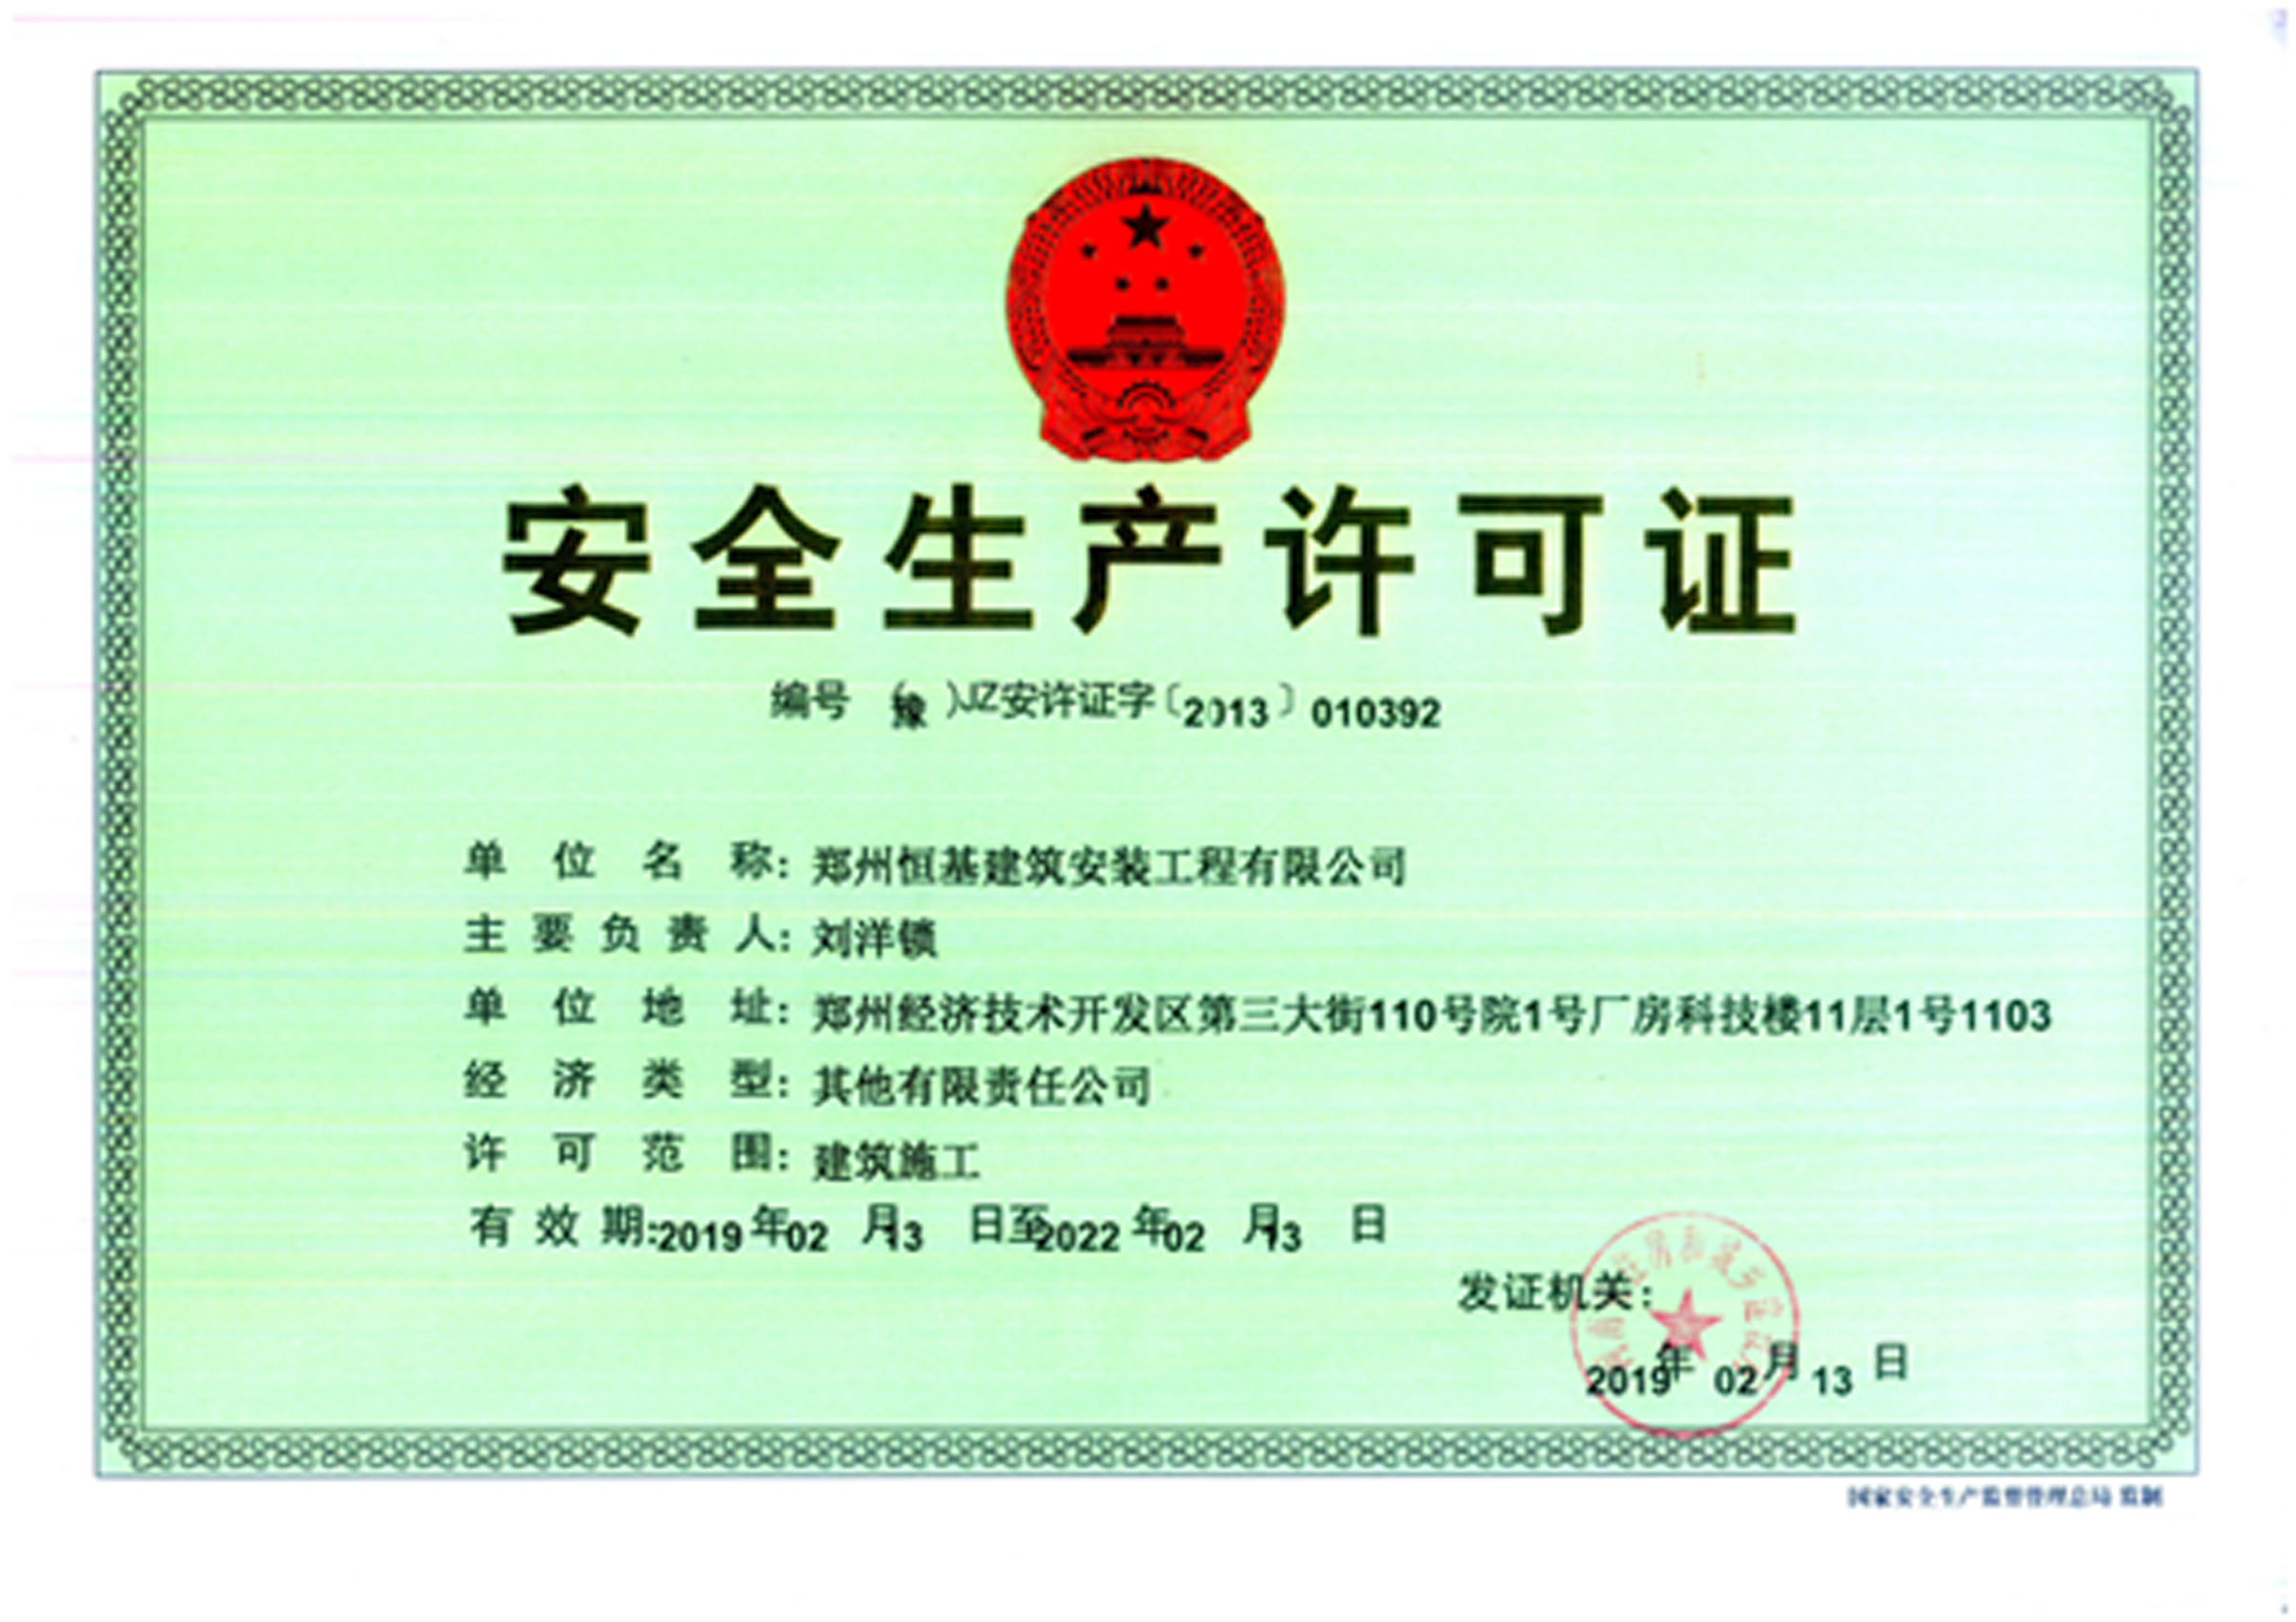 C30混凝土等商品混凝土在郑州混凝土市场的安全生产许可正本